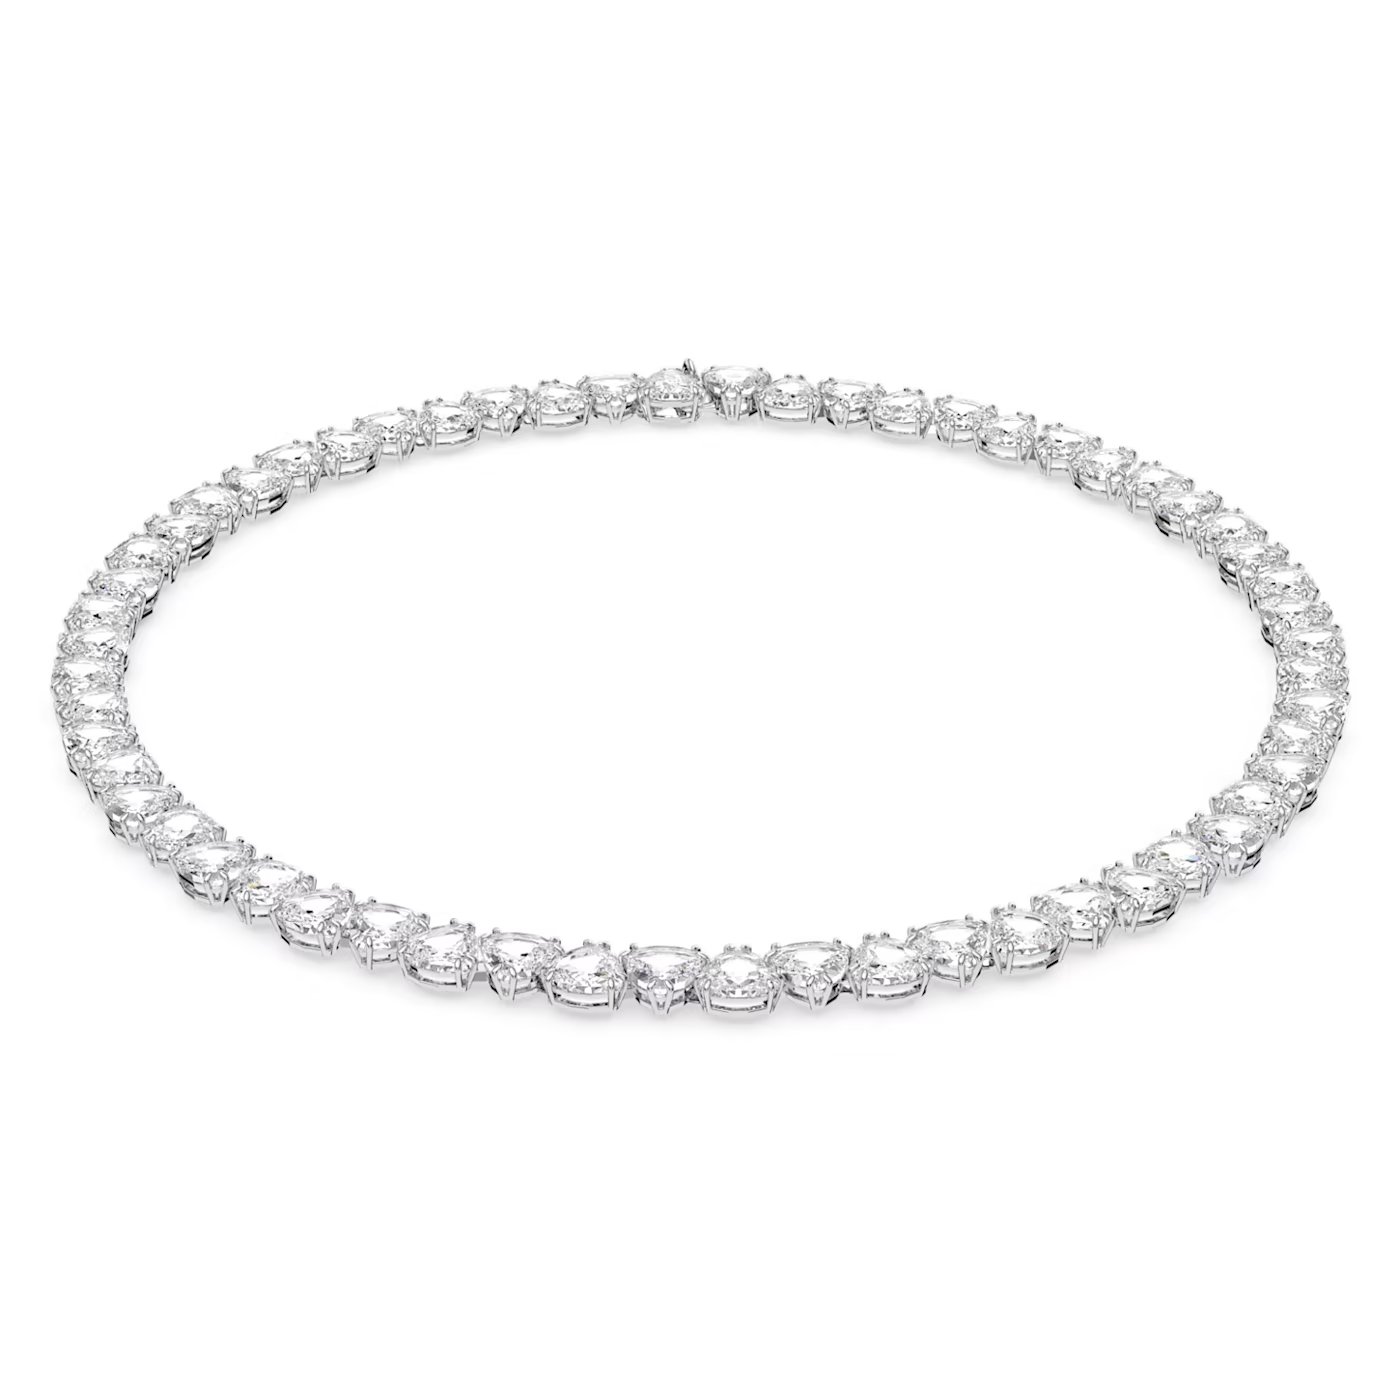 62dad02151a09_px-millenia-necklace--trilliant-cut--white--rhodium-plated-swarovski-5621138.jpg